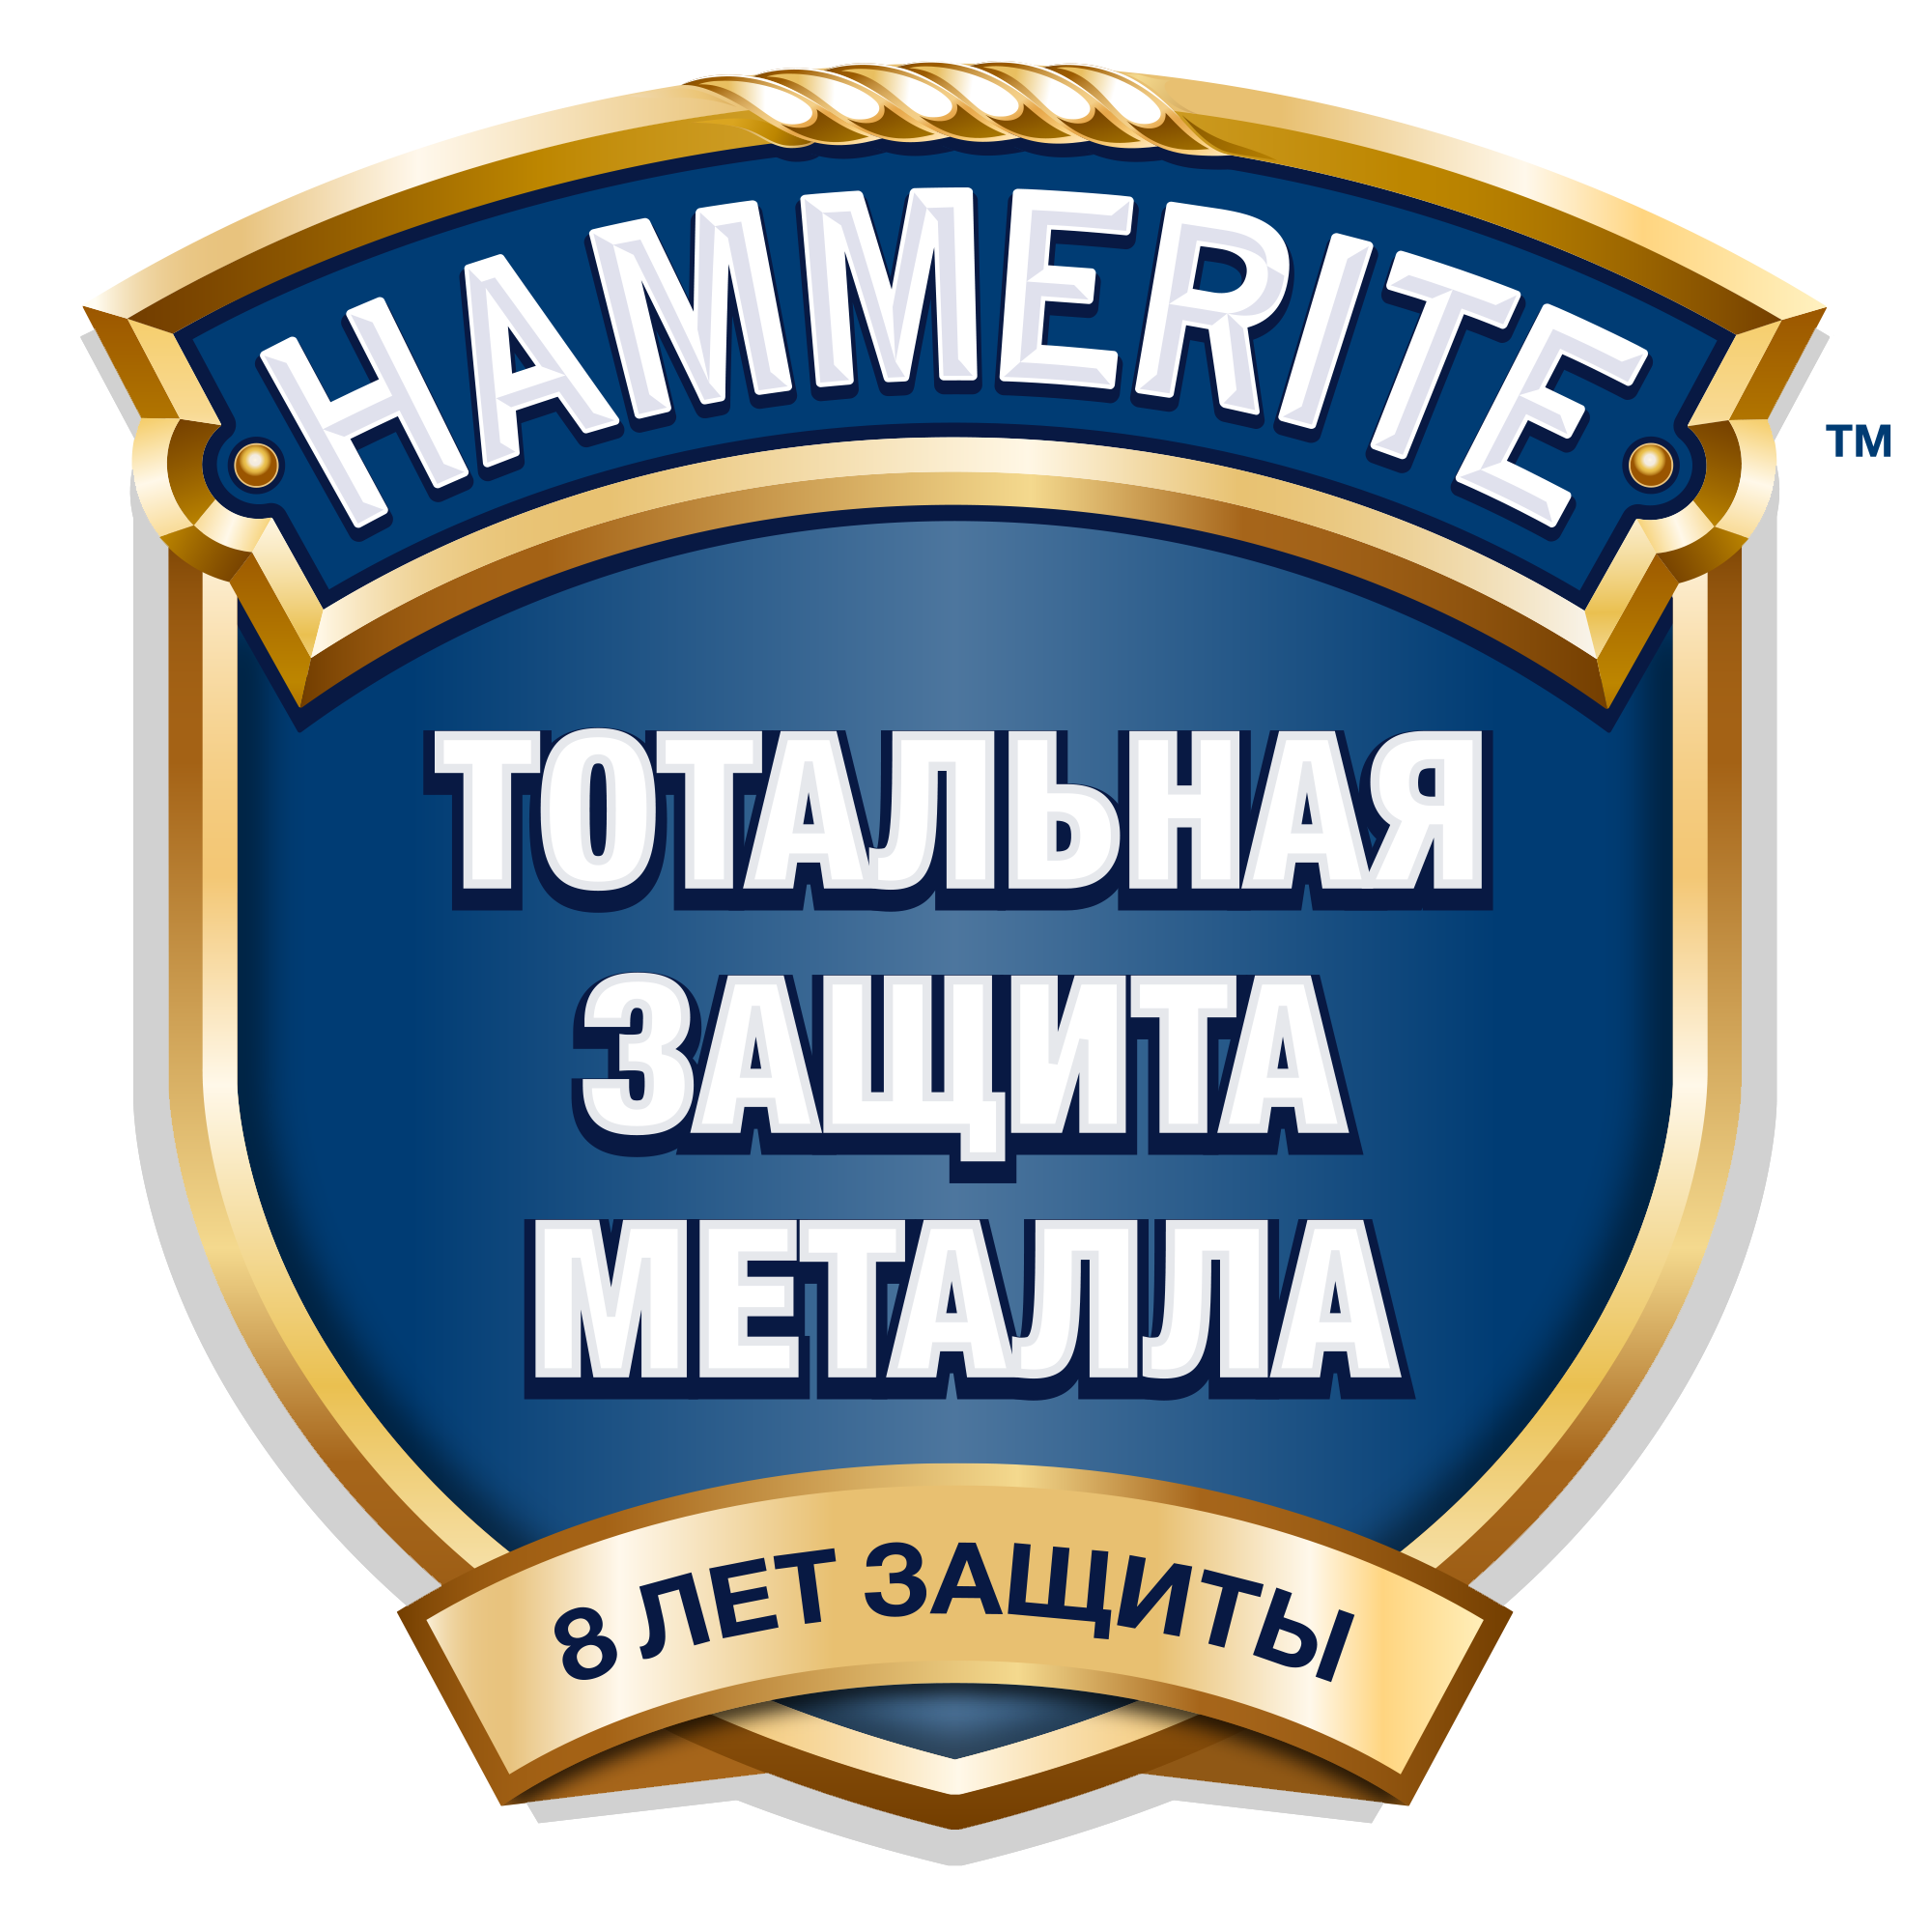 Hammerite - shield logo